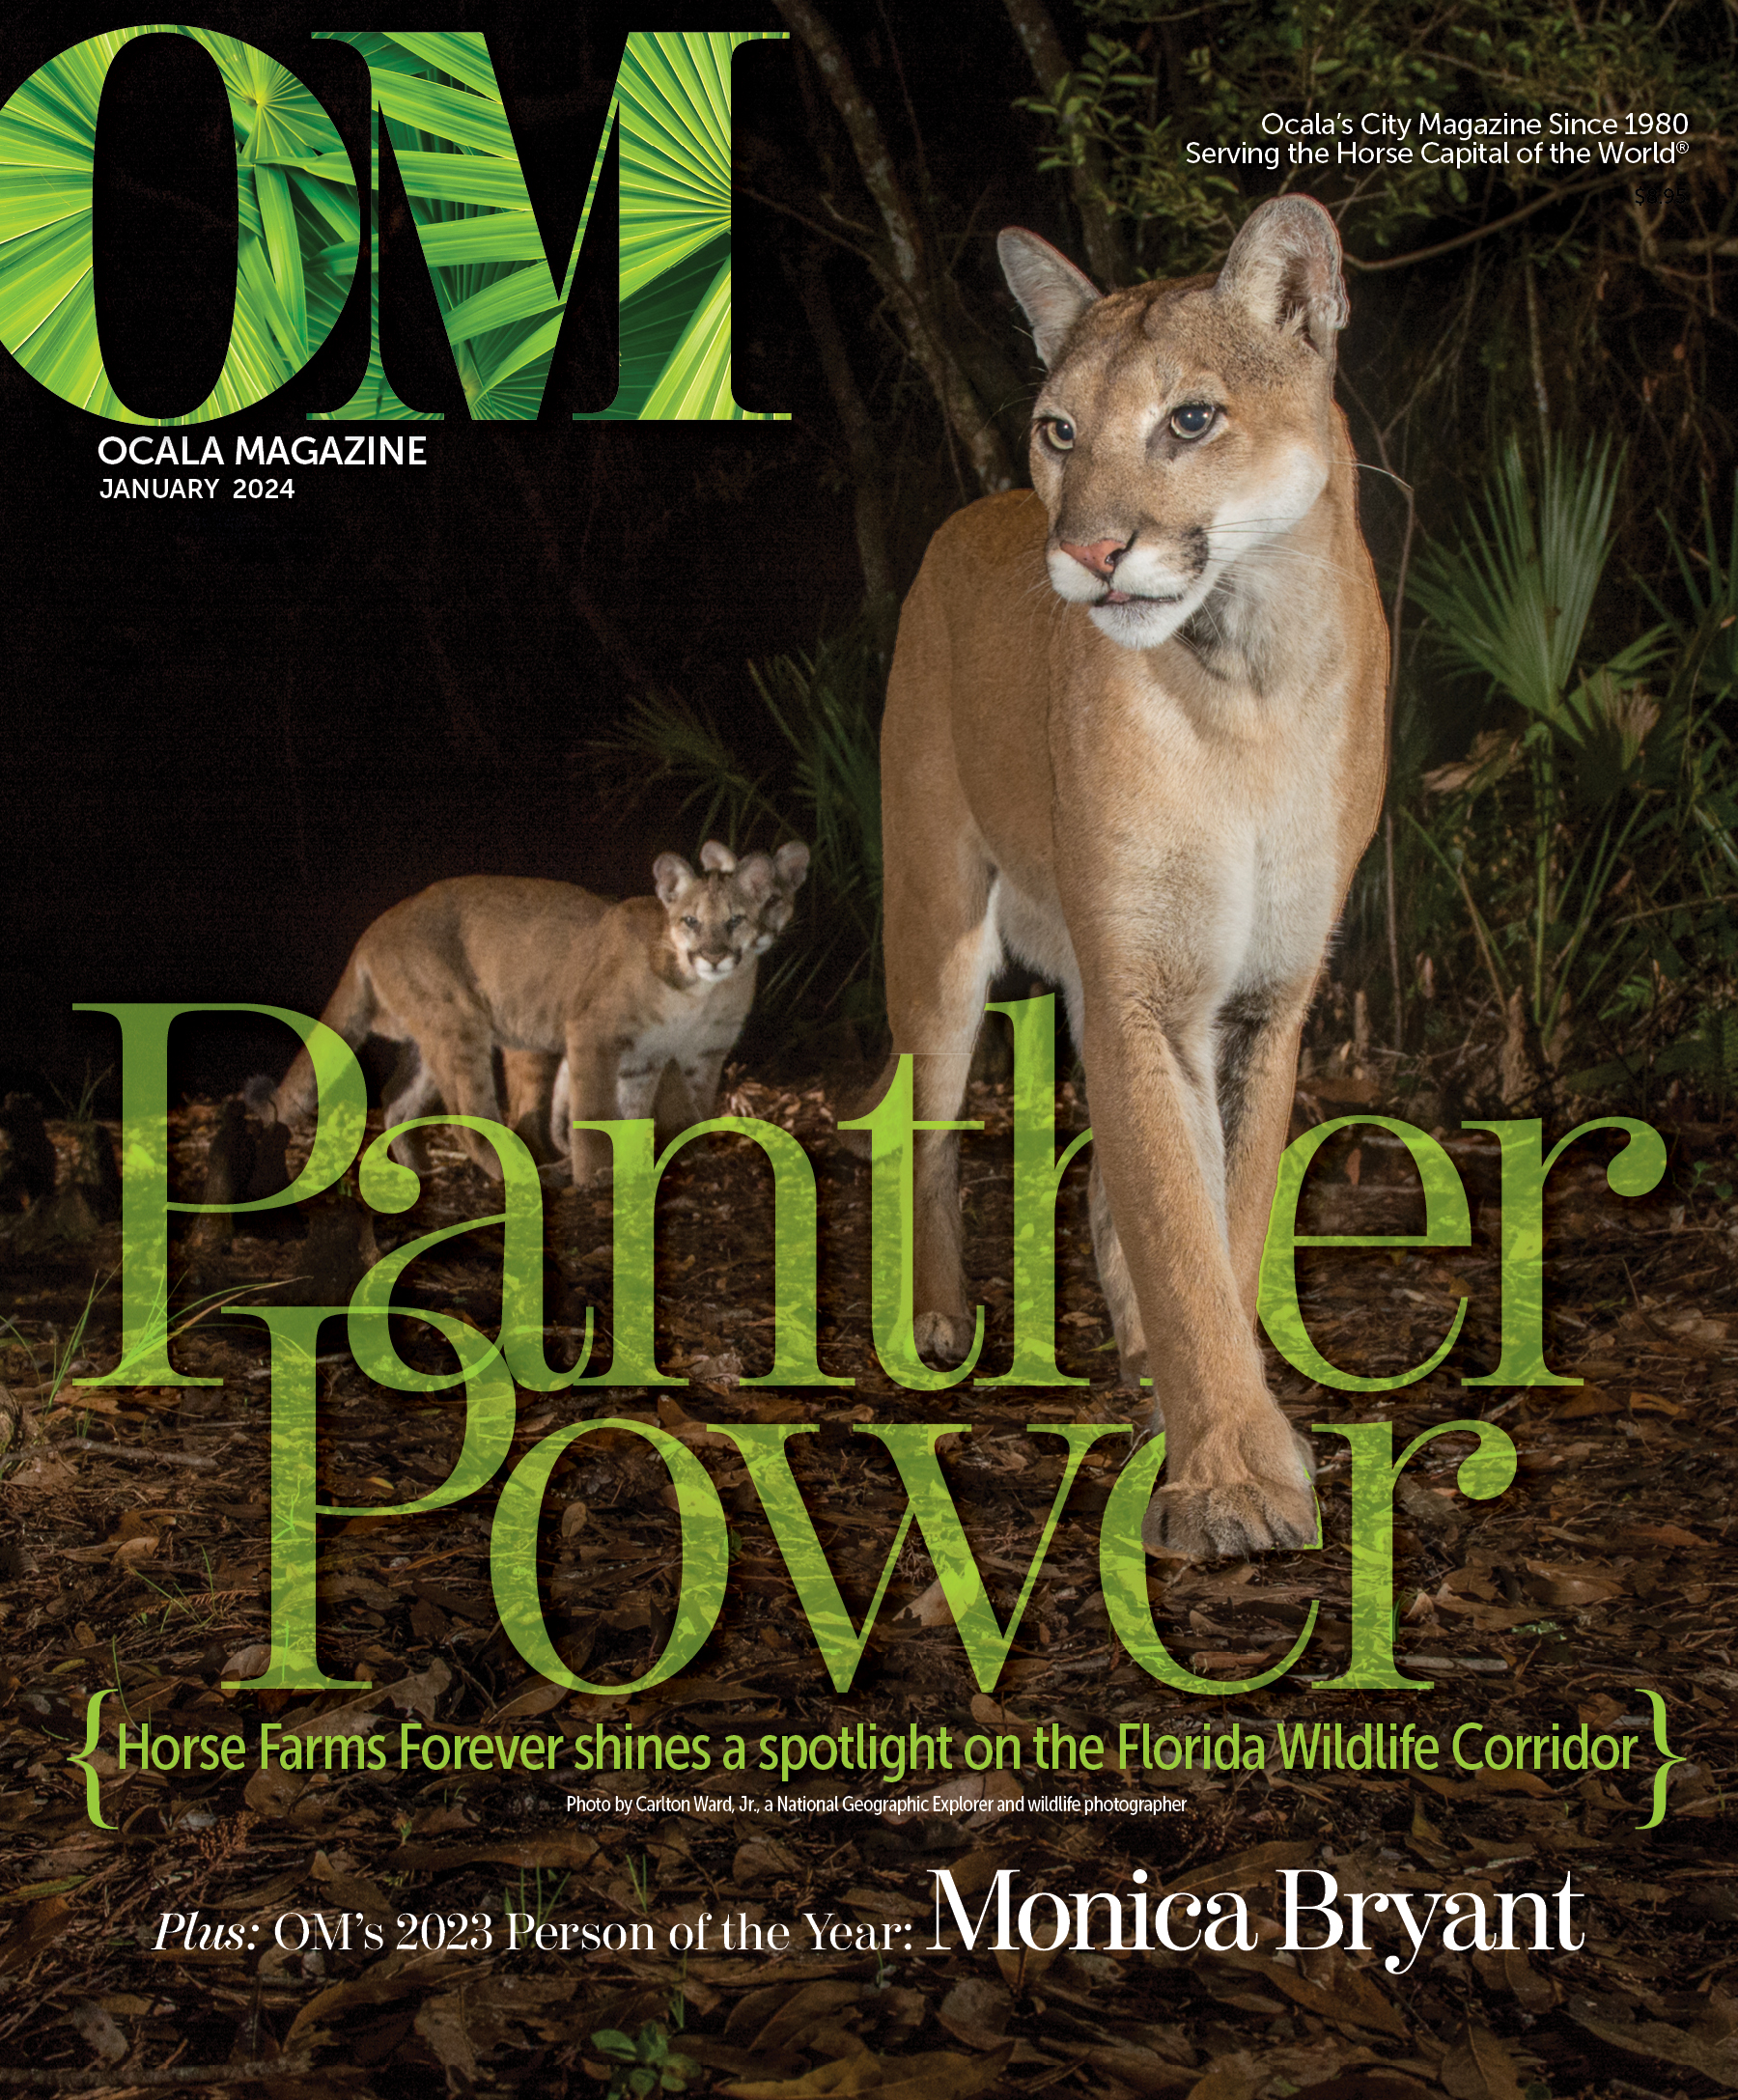 Ocala Magazine January 2024 cover